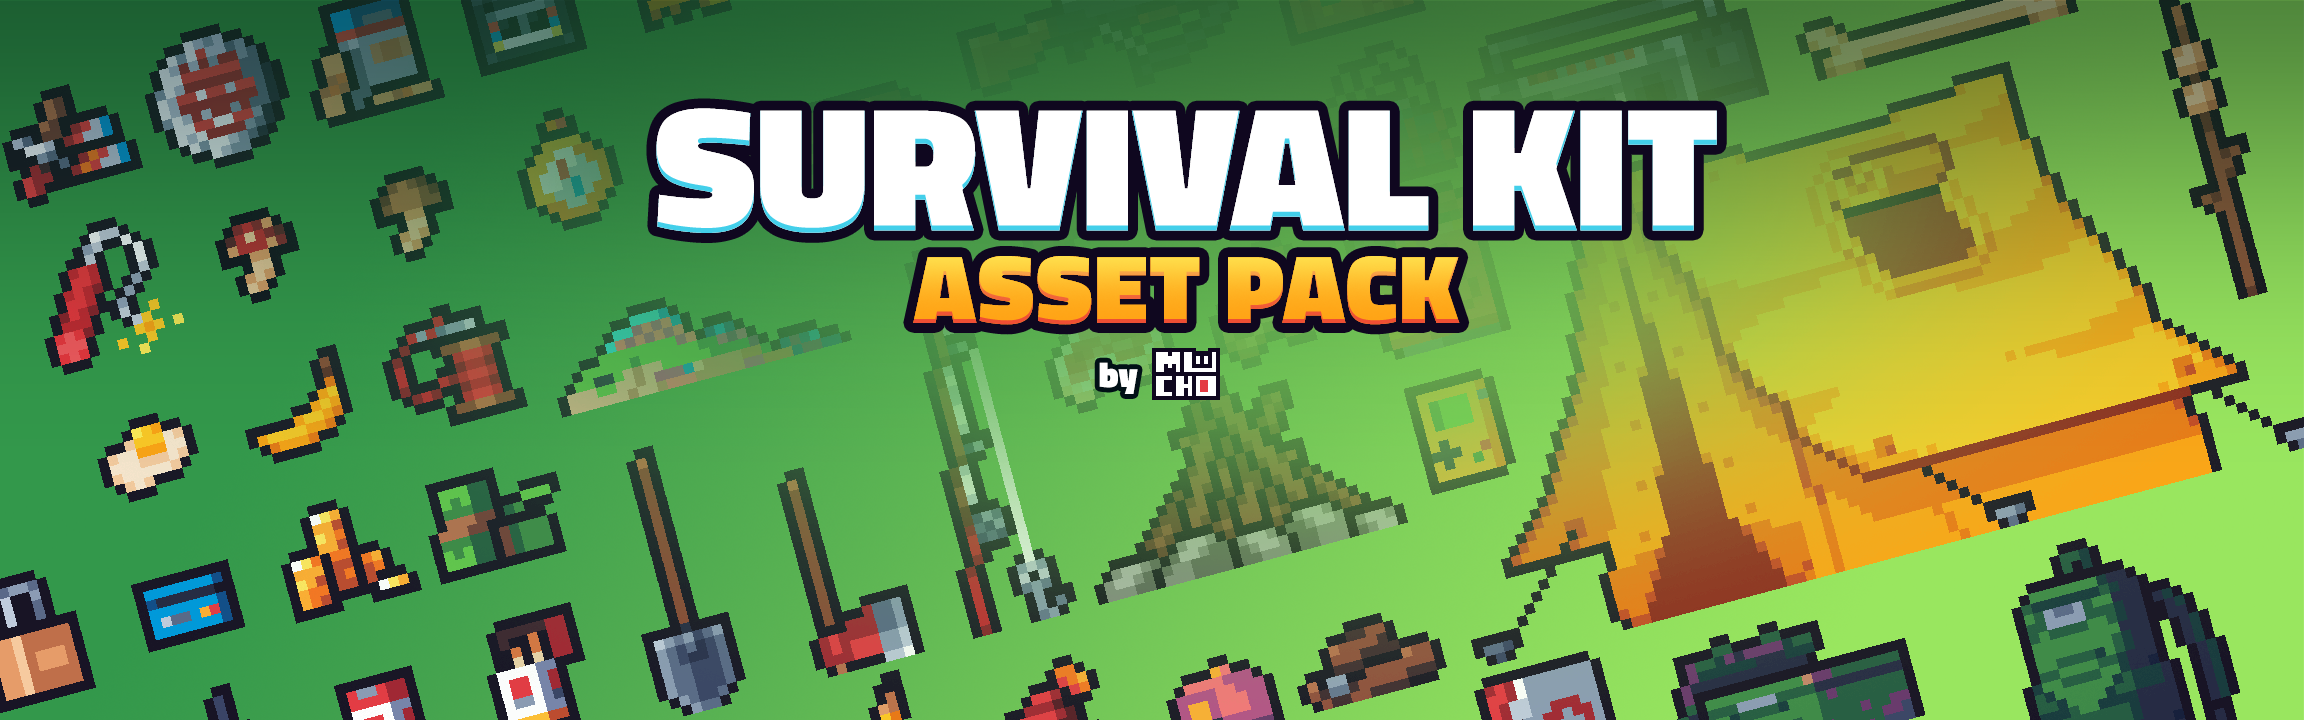 Survival Kit Asset Pack